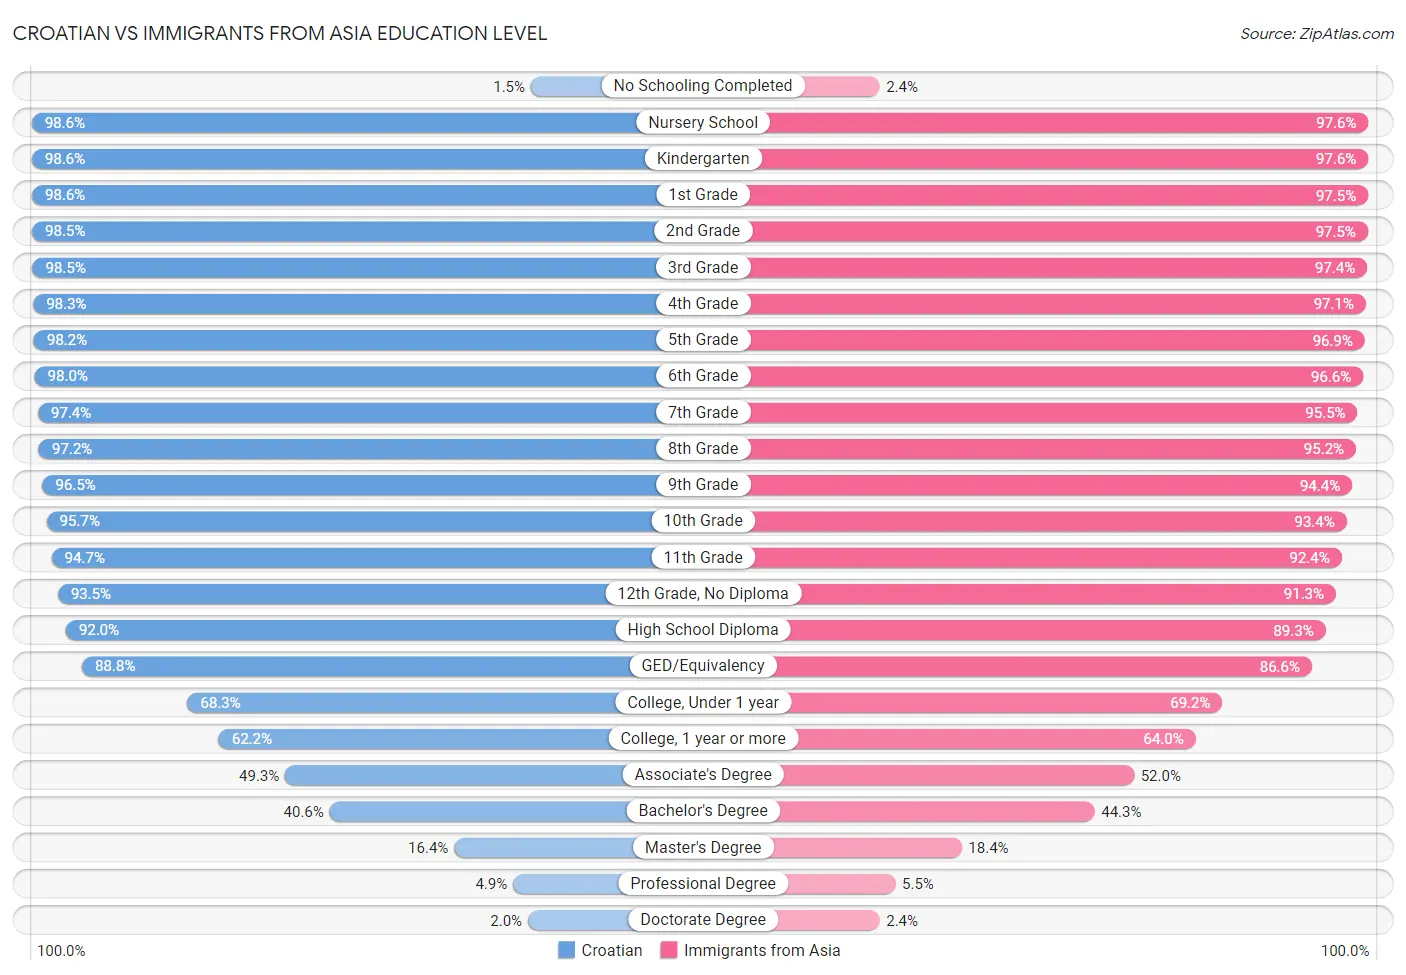 Croatian vs Immigrants from Asia Education Level